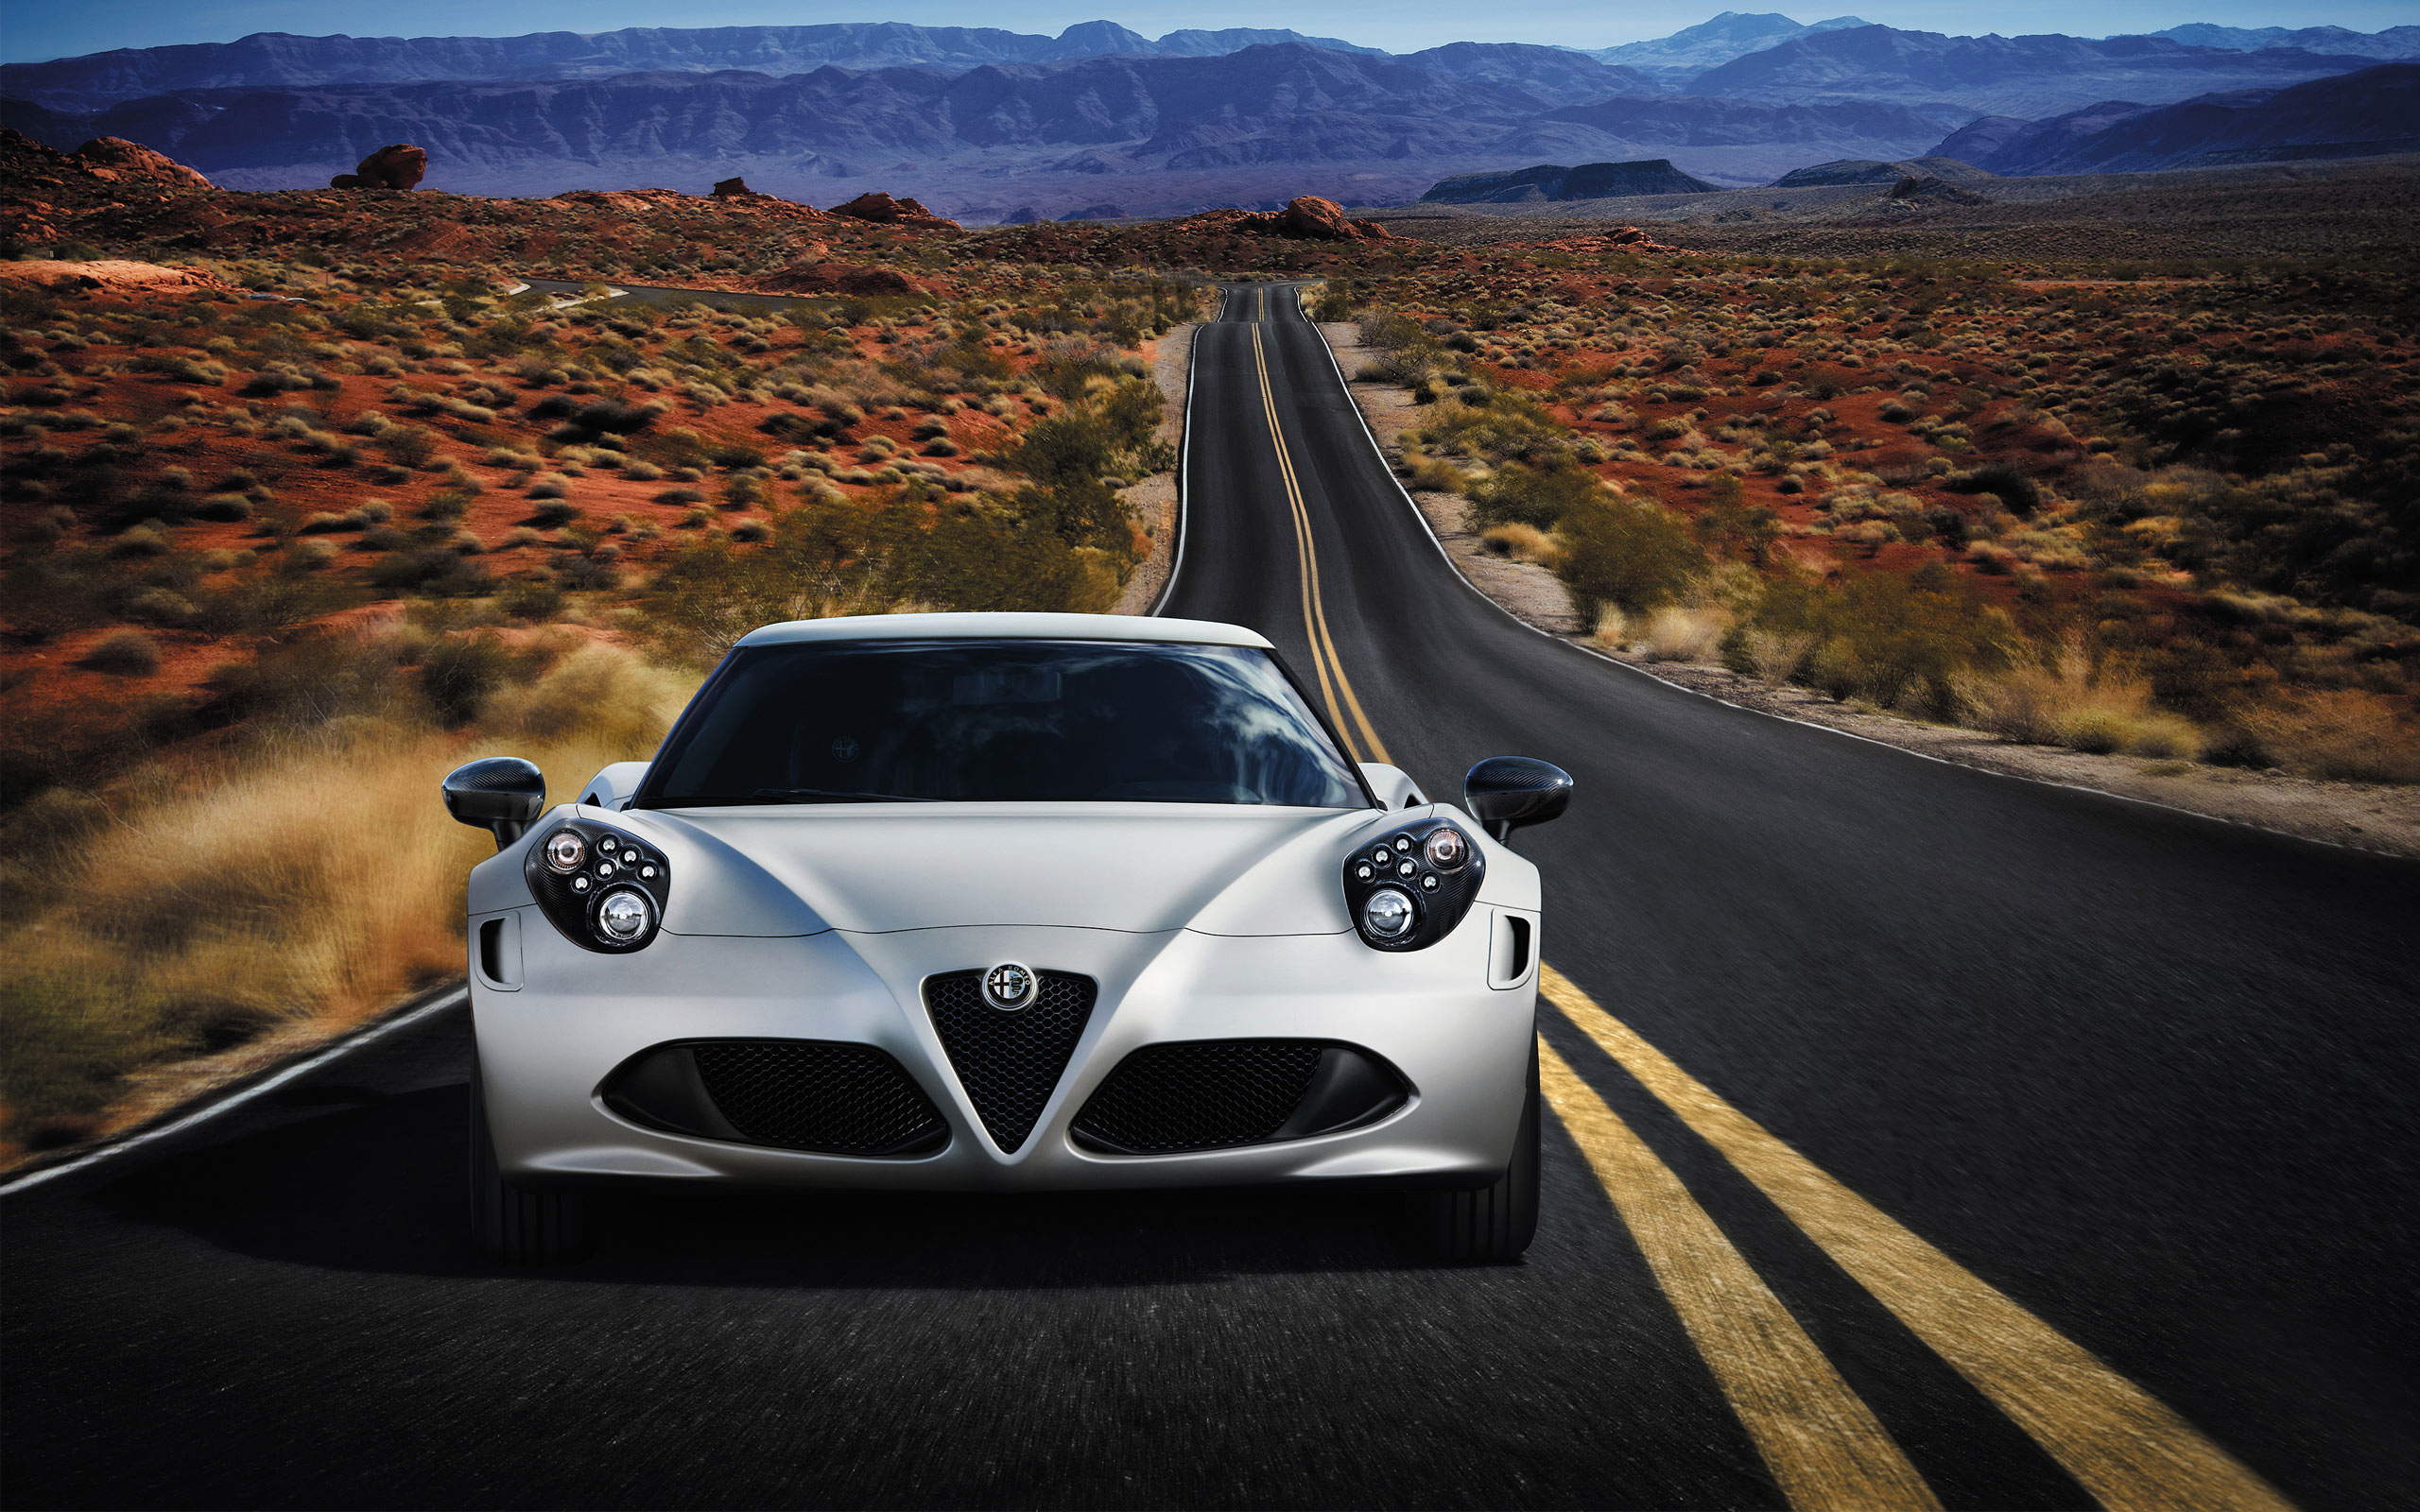 Alfa Romeo 4C 2014 Wallpaper | HD Car Wallpapers | ID #3320